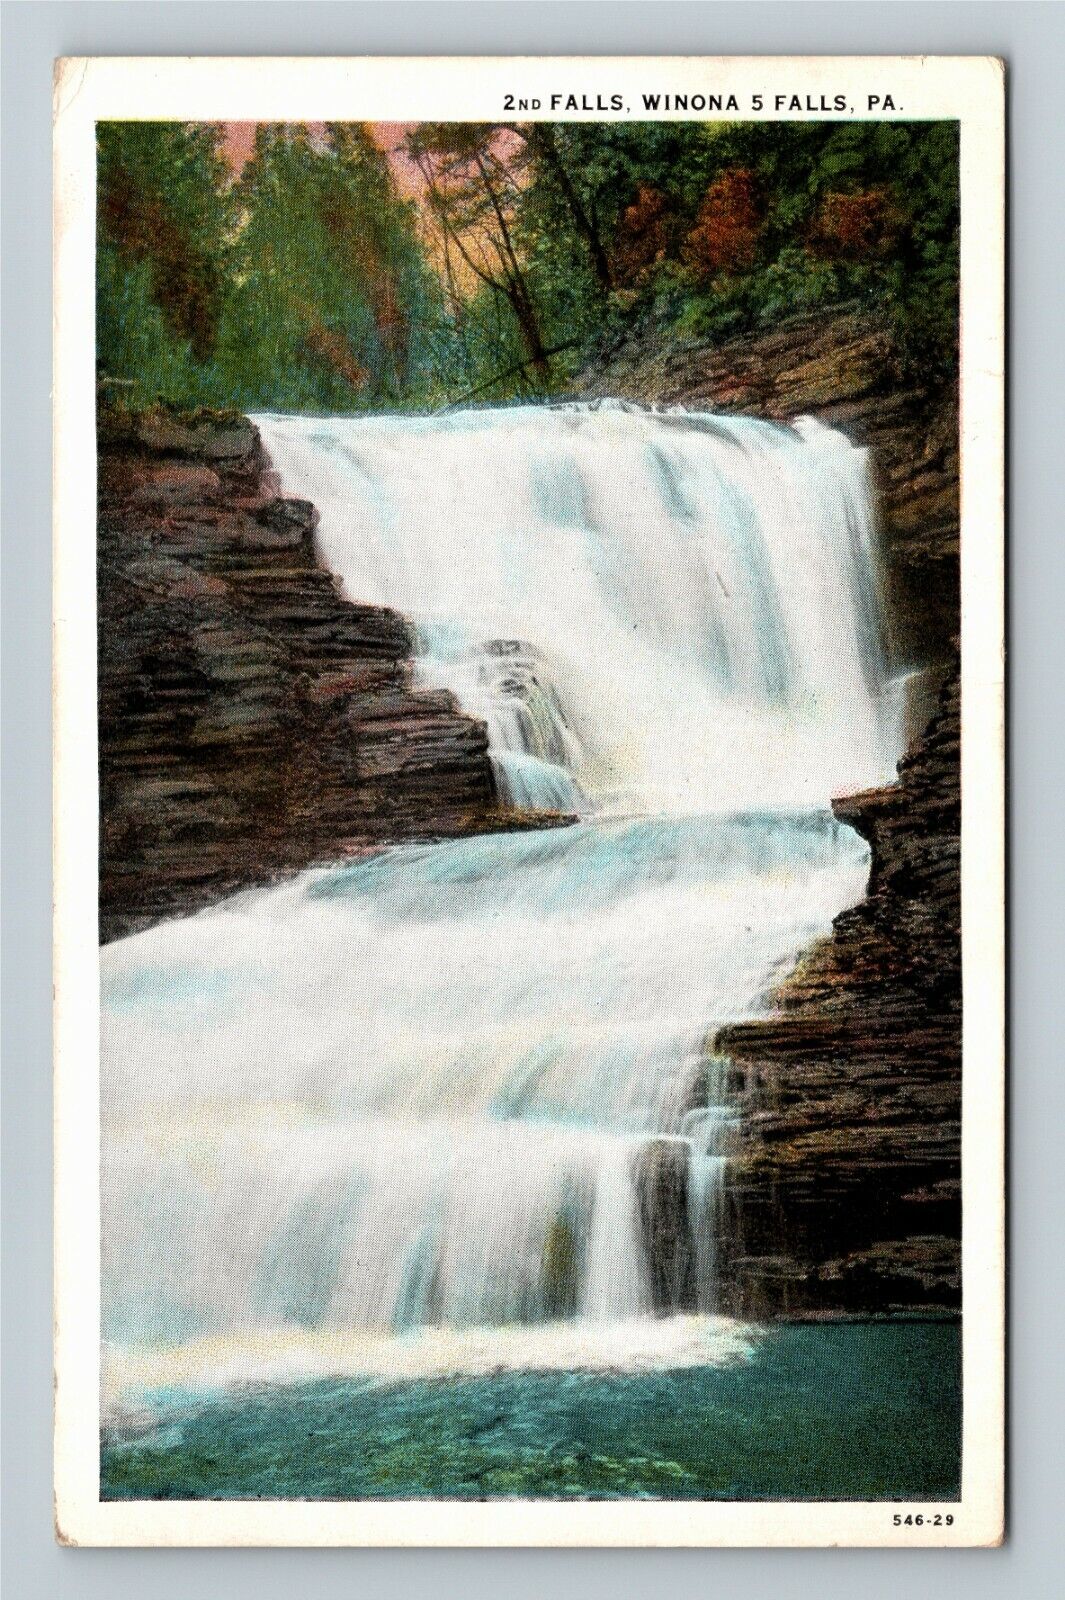 Winona 5 Falls, PA-Pennsylvania, 2nd Water Fall, c1937 Vintage Postcard